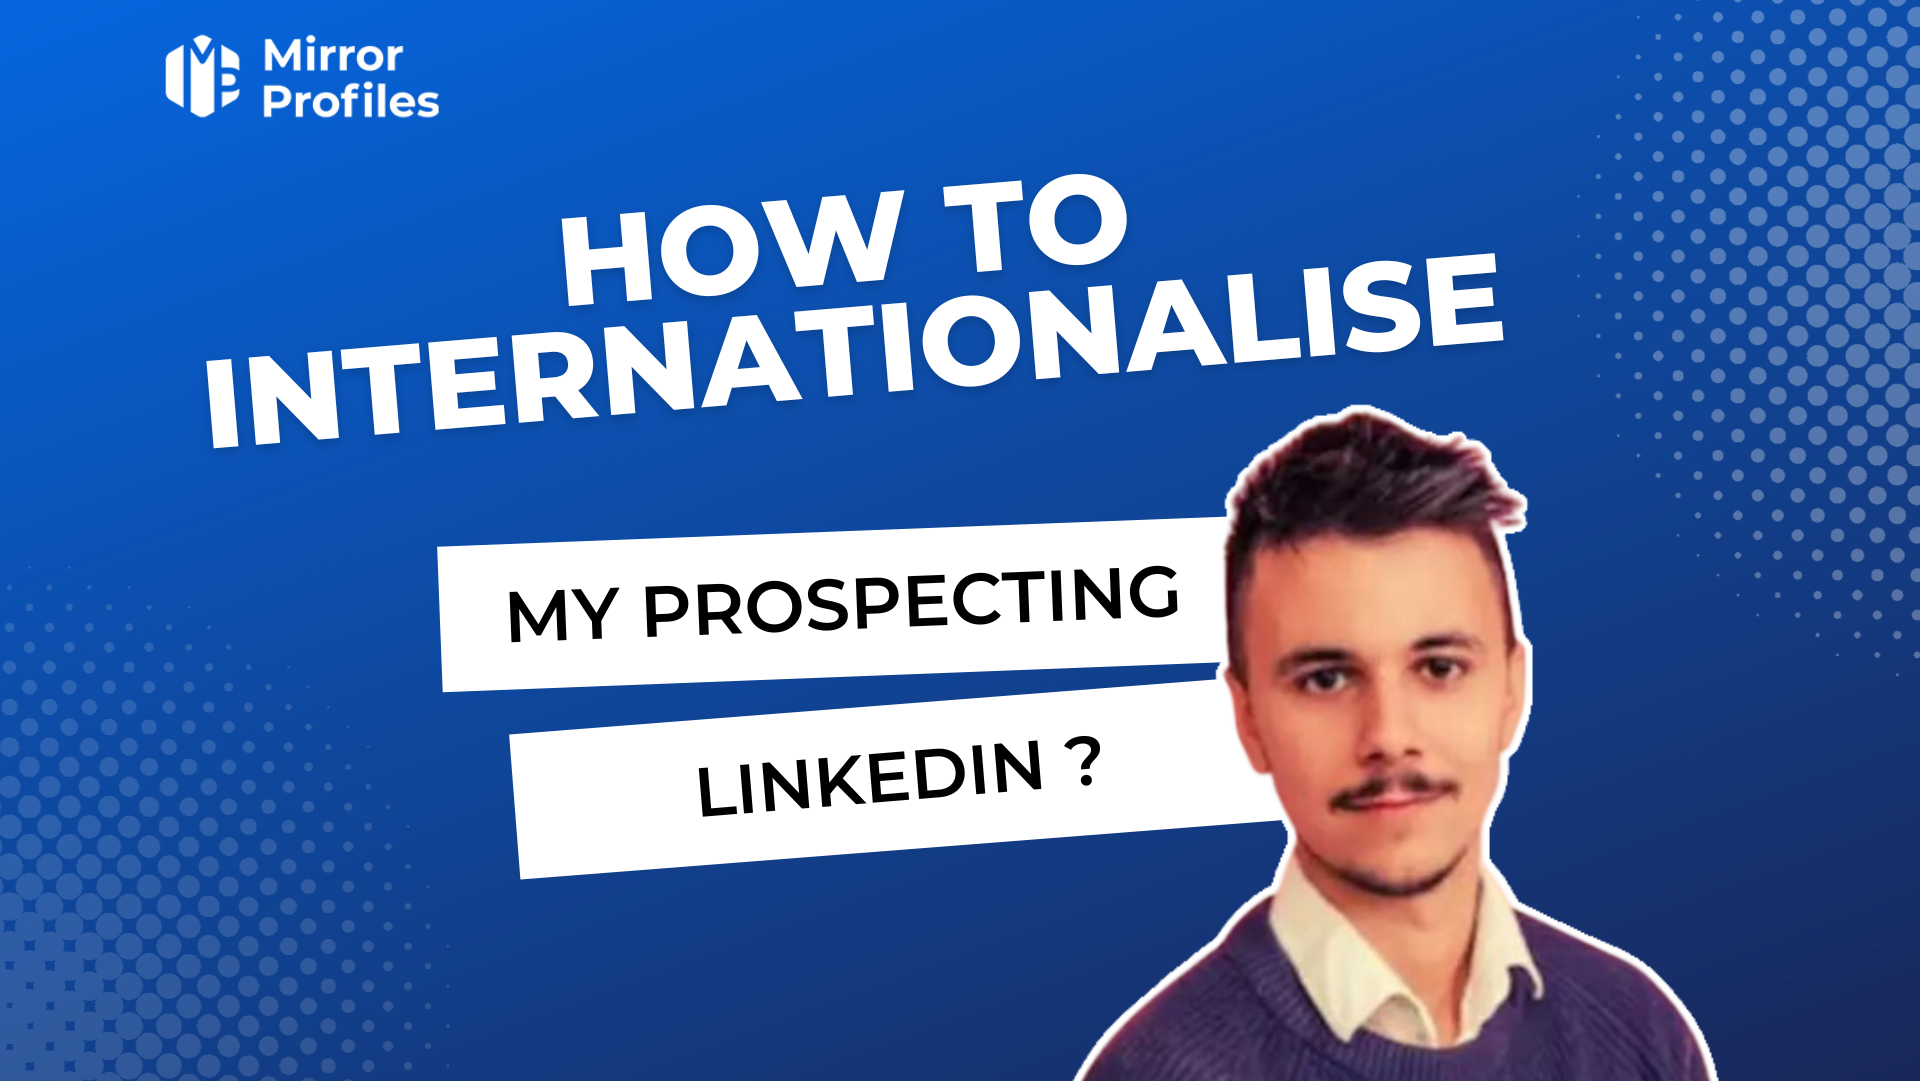 How can I internationalise my Linkedin prospecting?